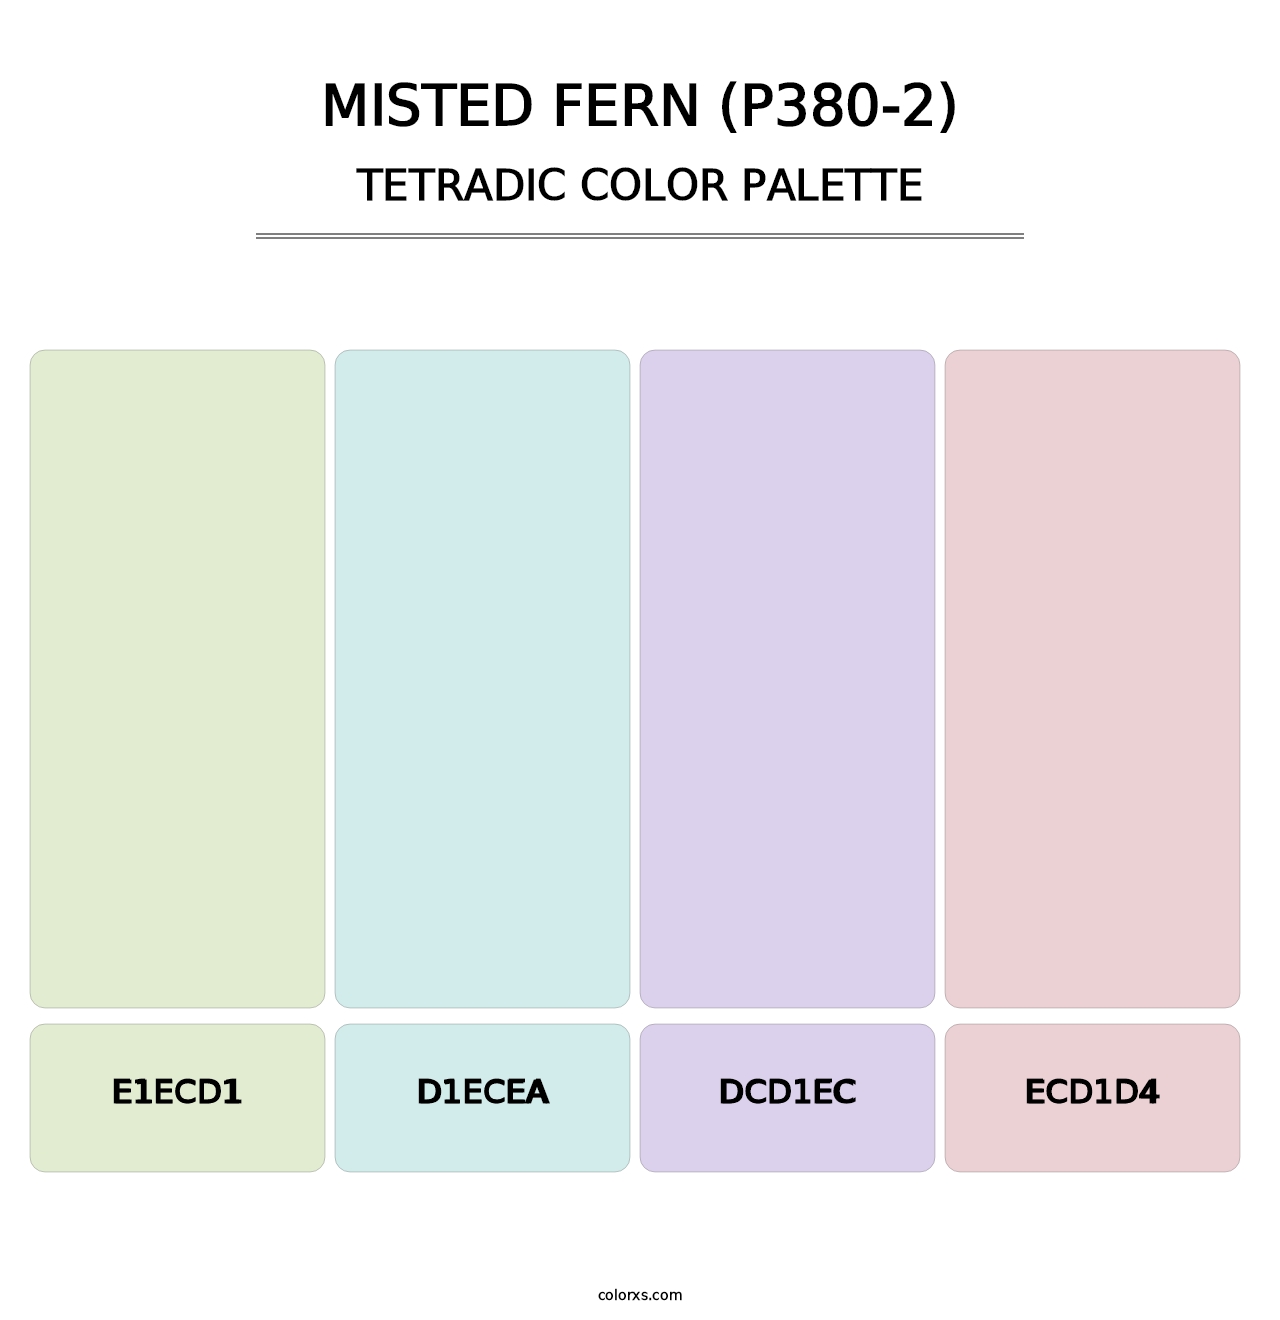 Misted Fern (P380-2) - Tetradic Color Palette